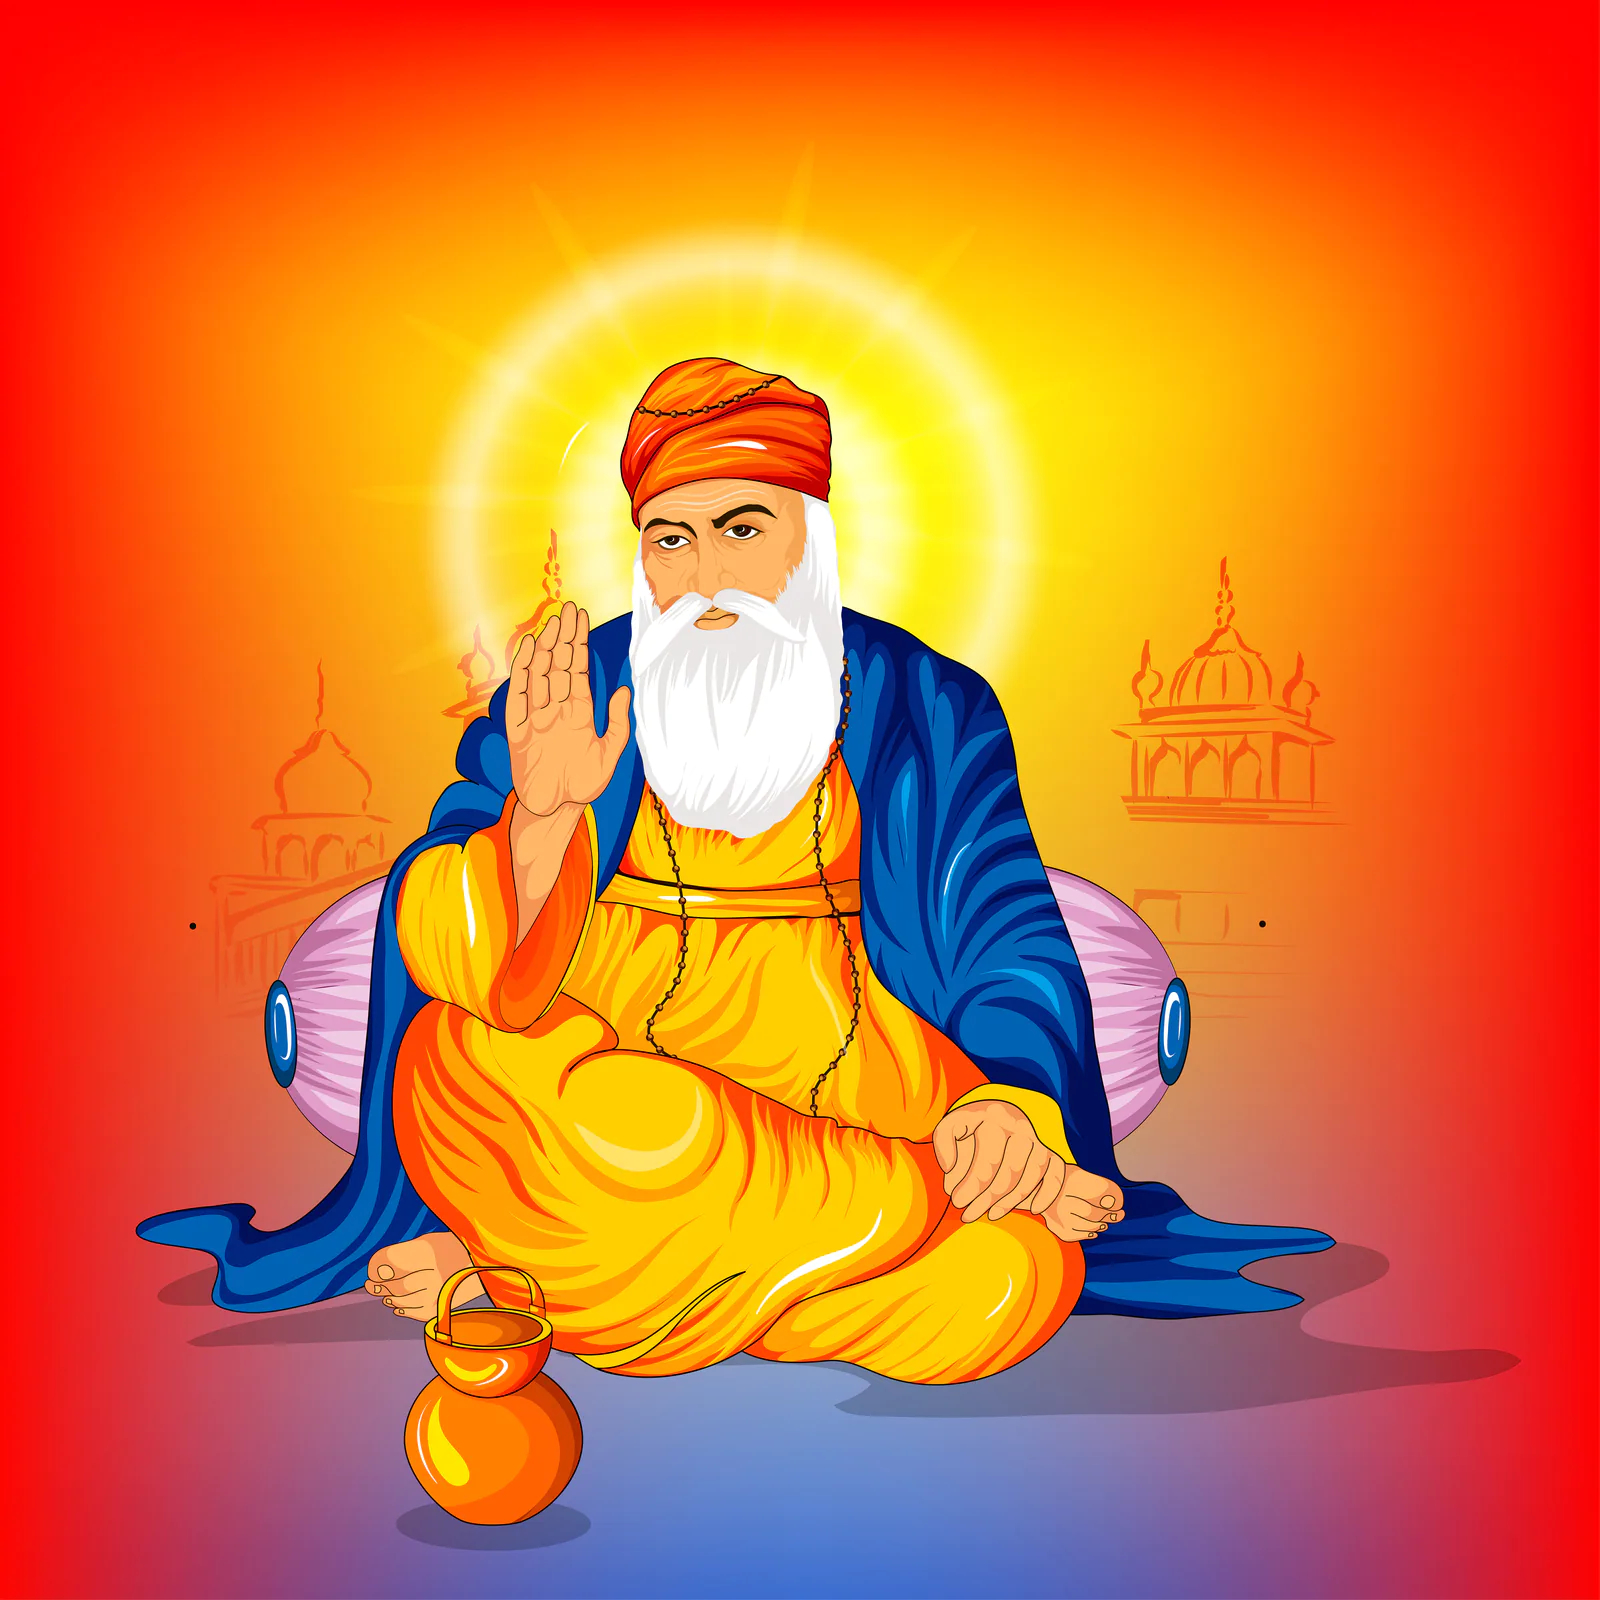 Guru Nanak Dev was the first Guru of Sikhism and founder of the religion